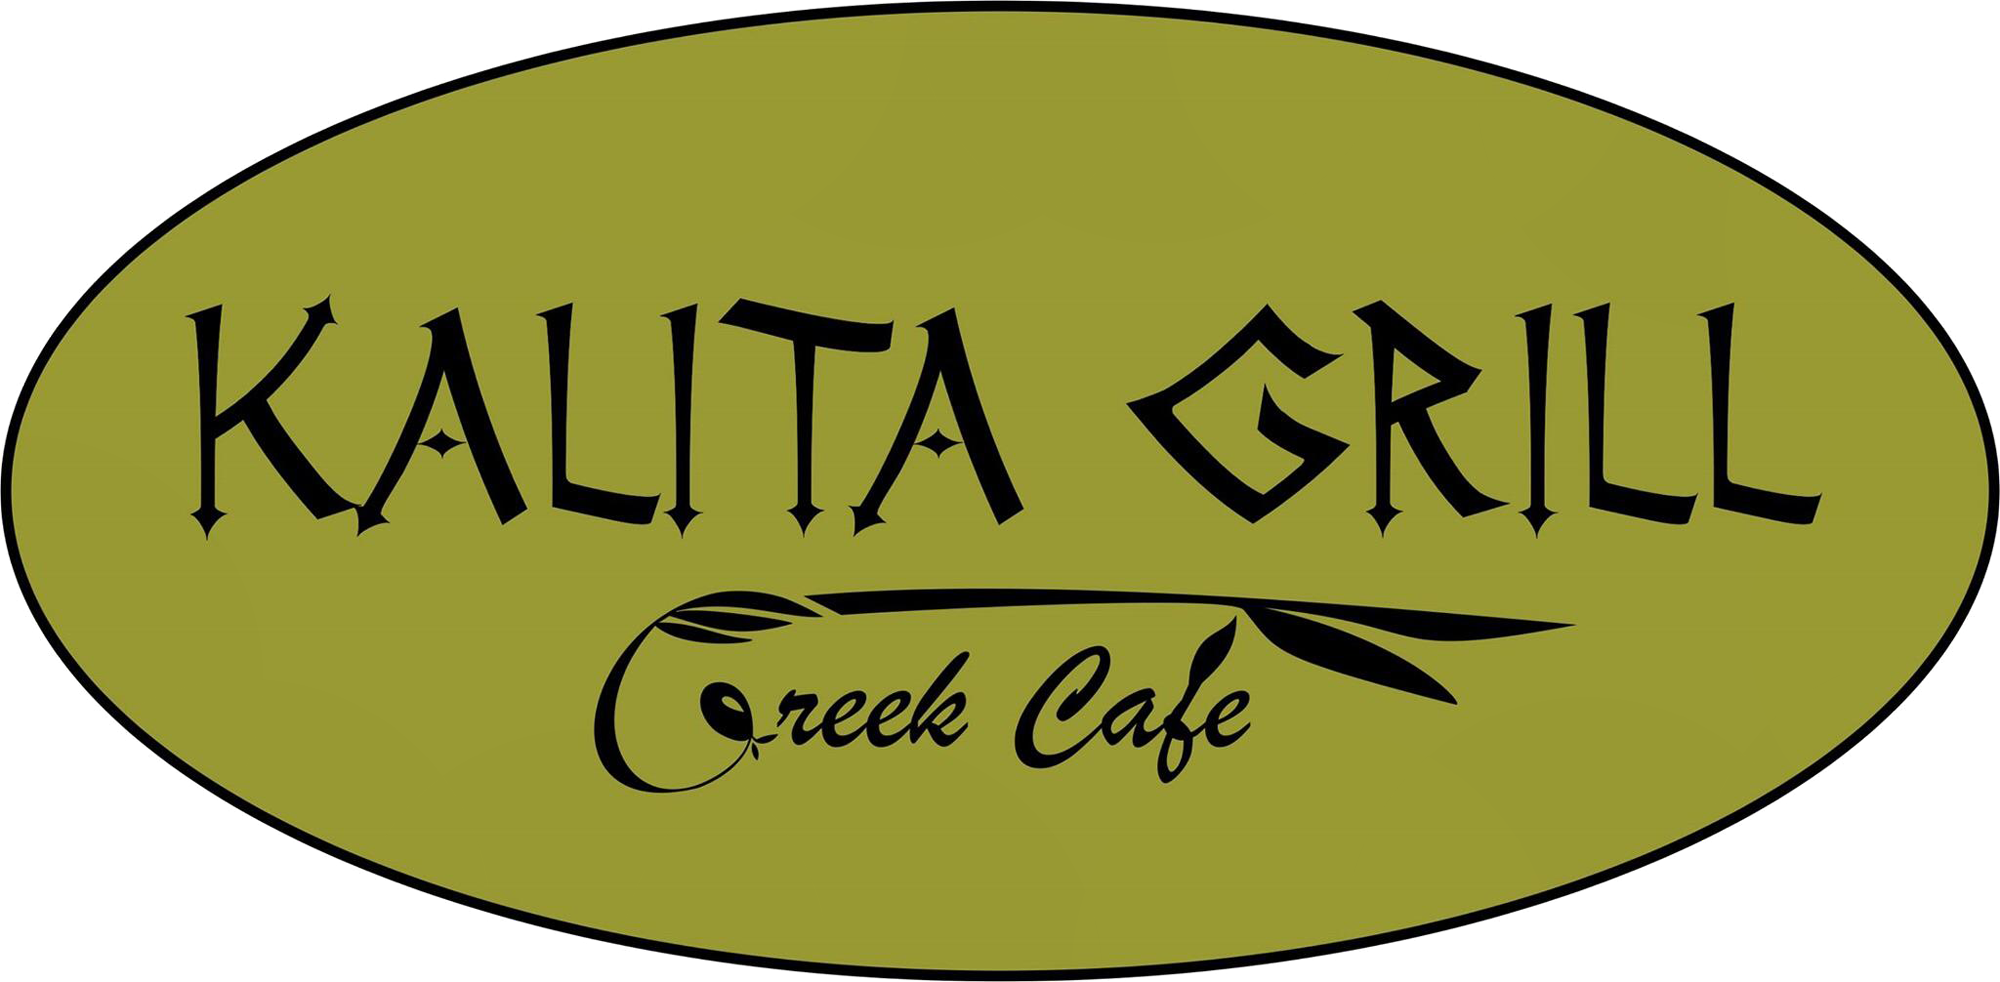 Welcome To Kalita Grill Greek Food That Celebrates - Kalita Grill Greek Cafe (2000x982)